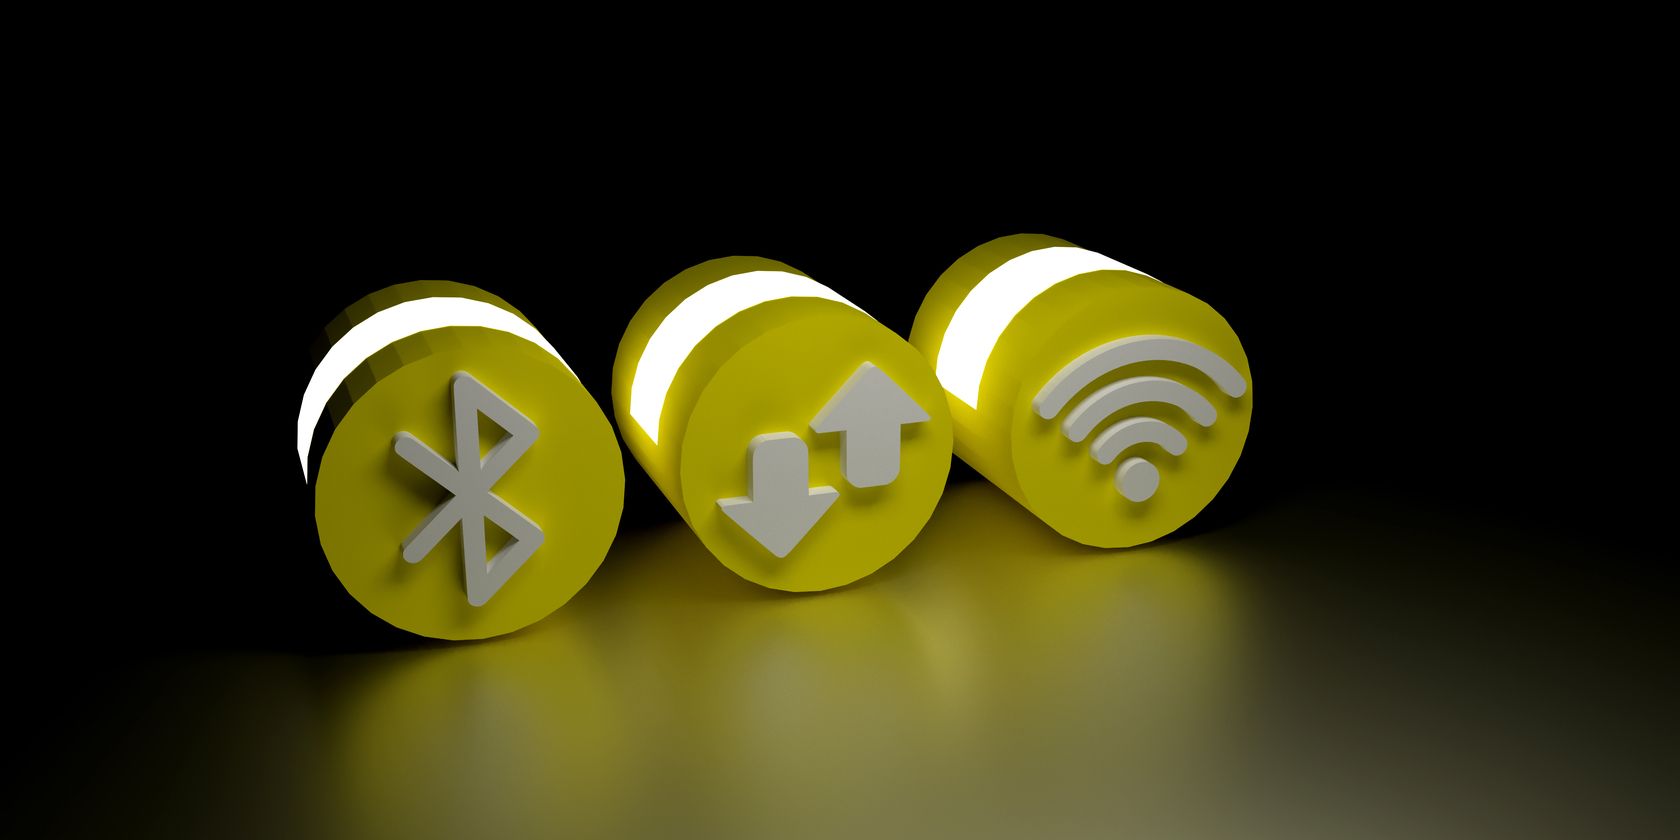 The Bluetooth logo alongside data and Wi-Fi symbols